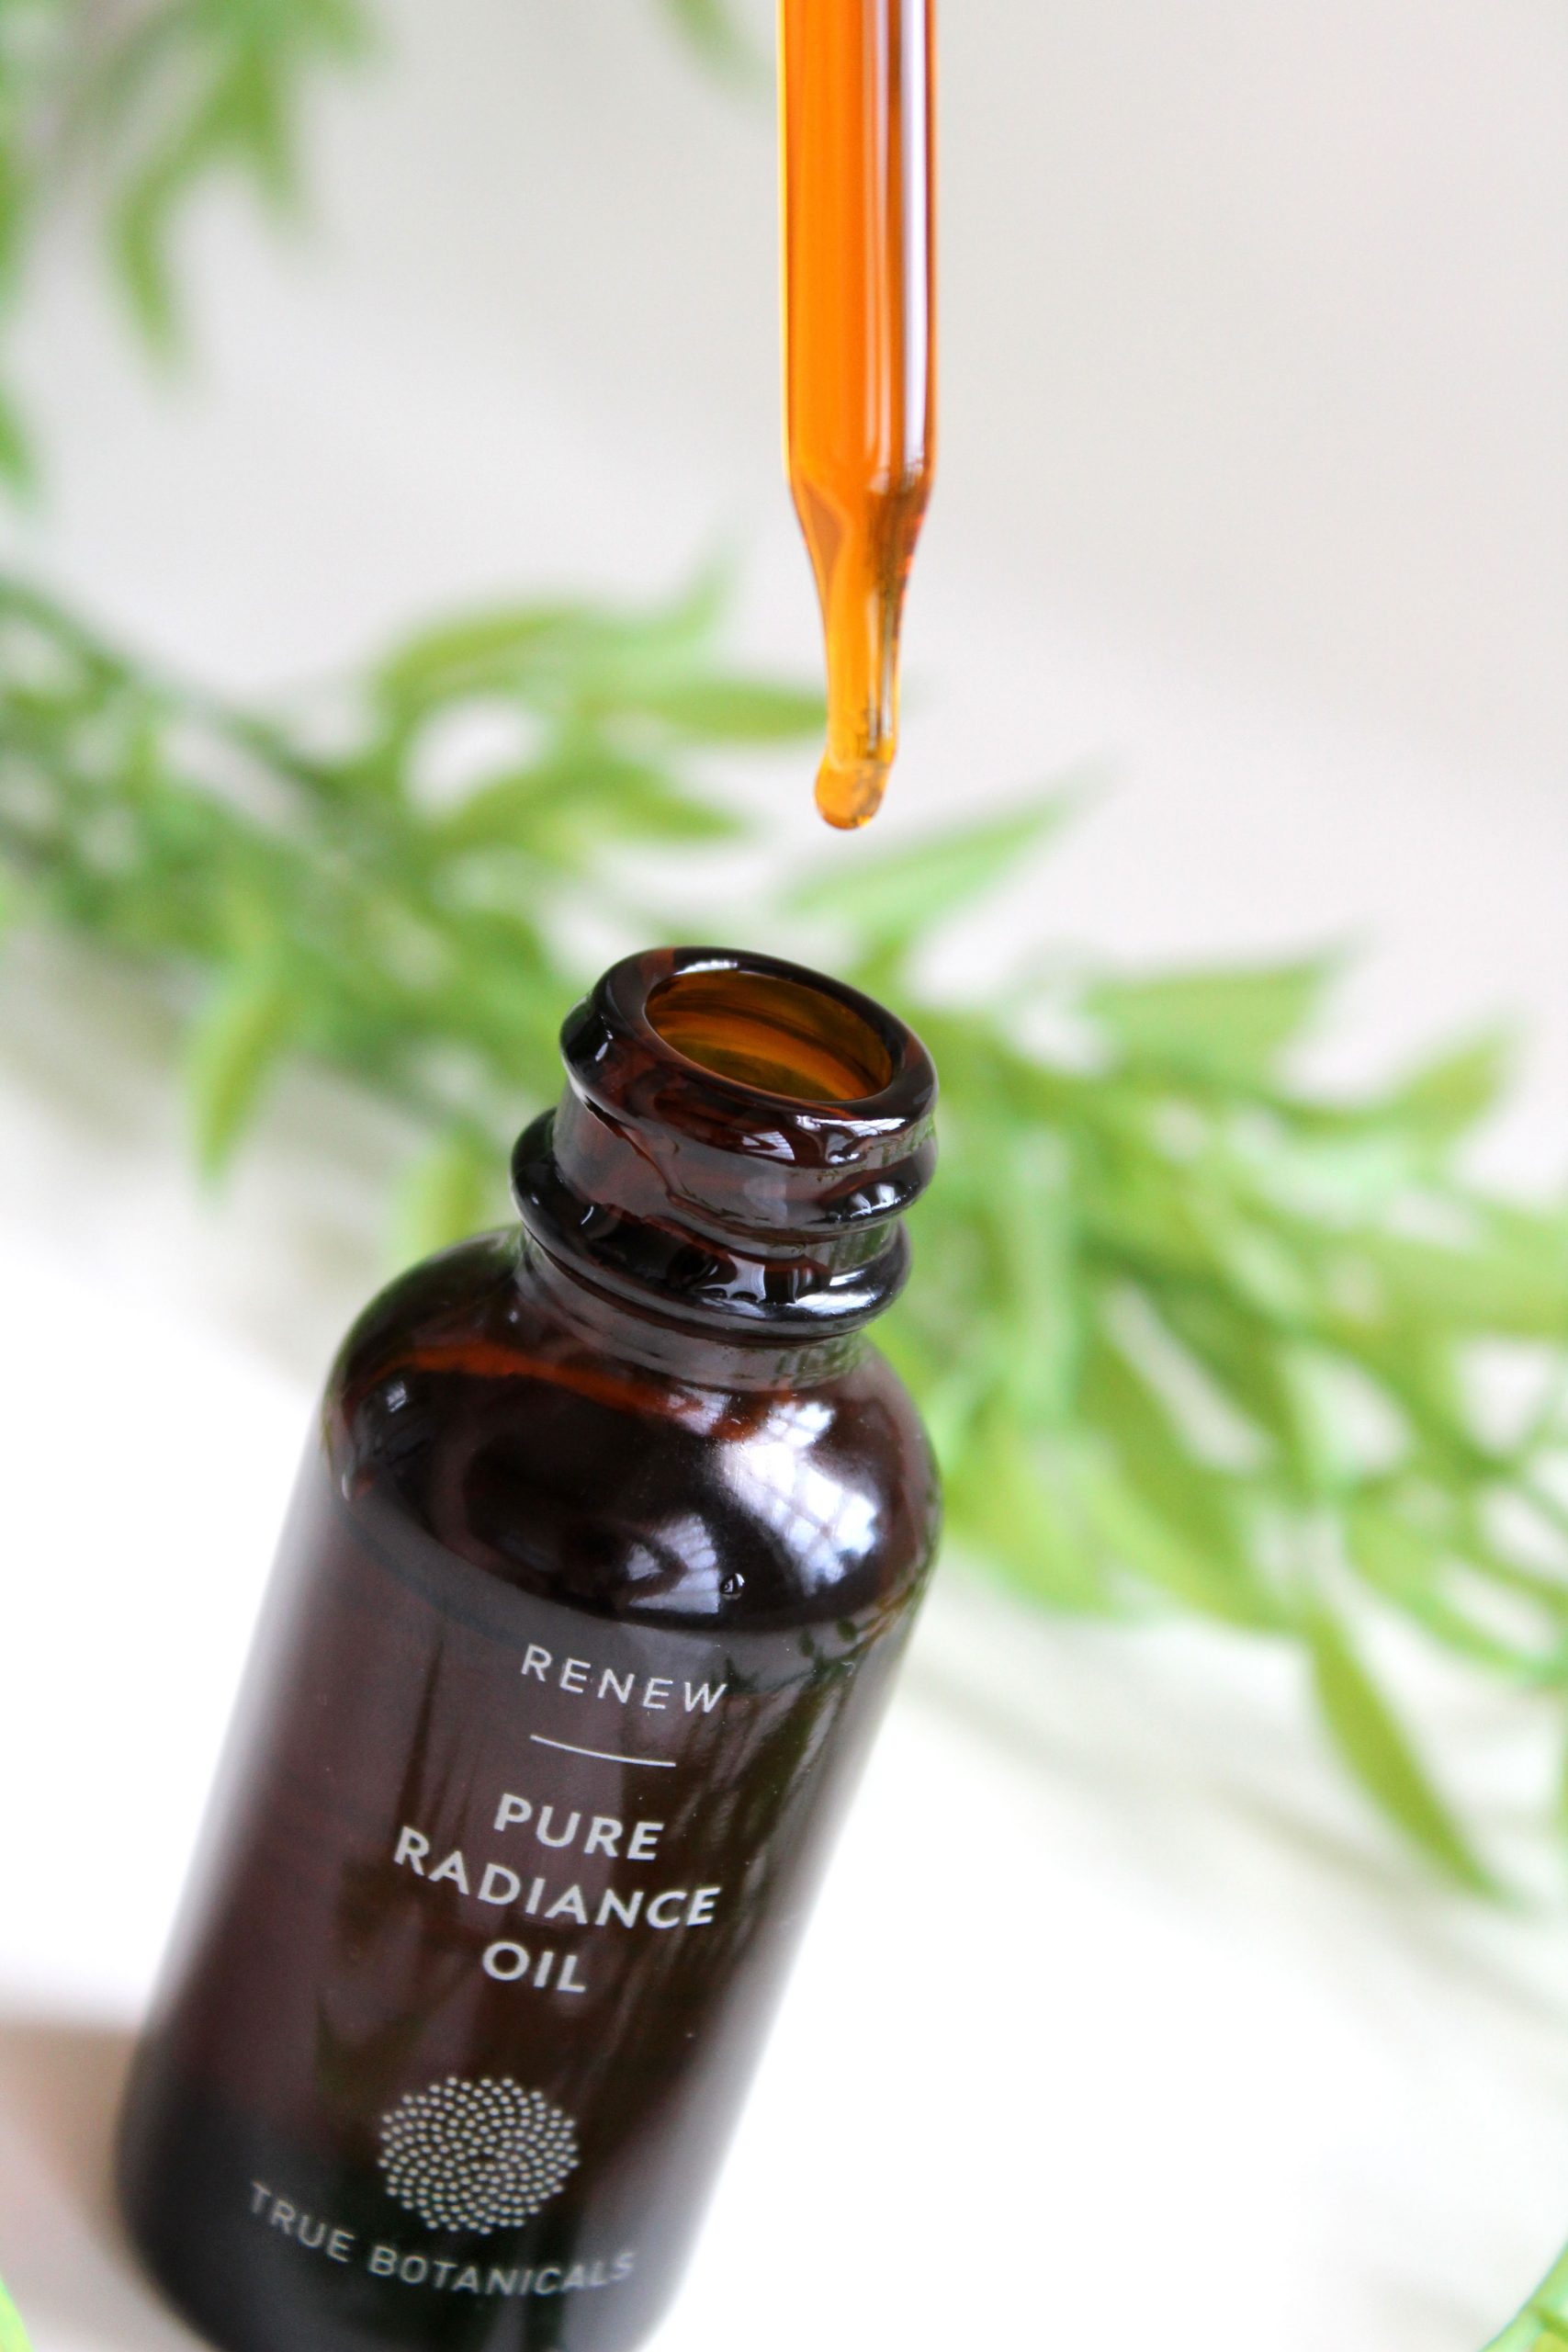 true botanicals pure radiance oil renew review by iliketotalkblog